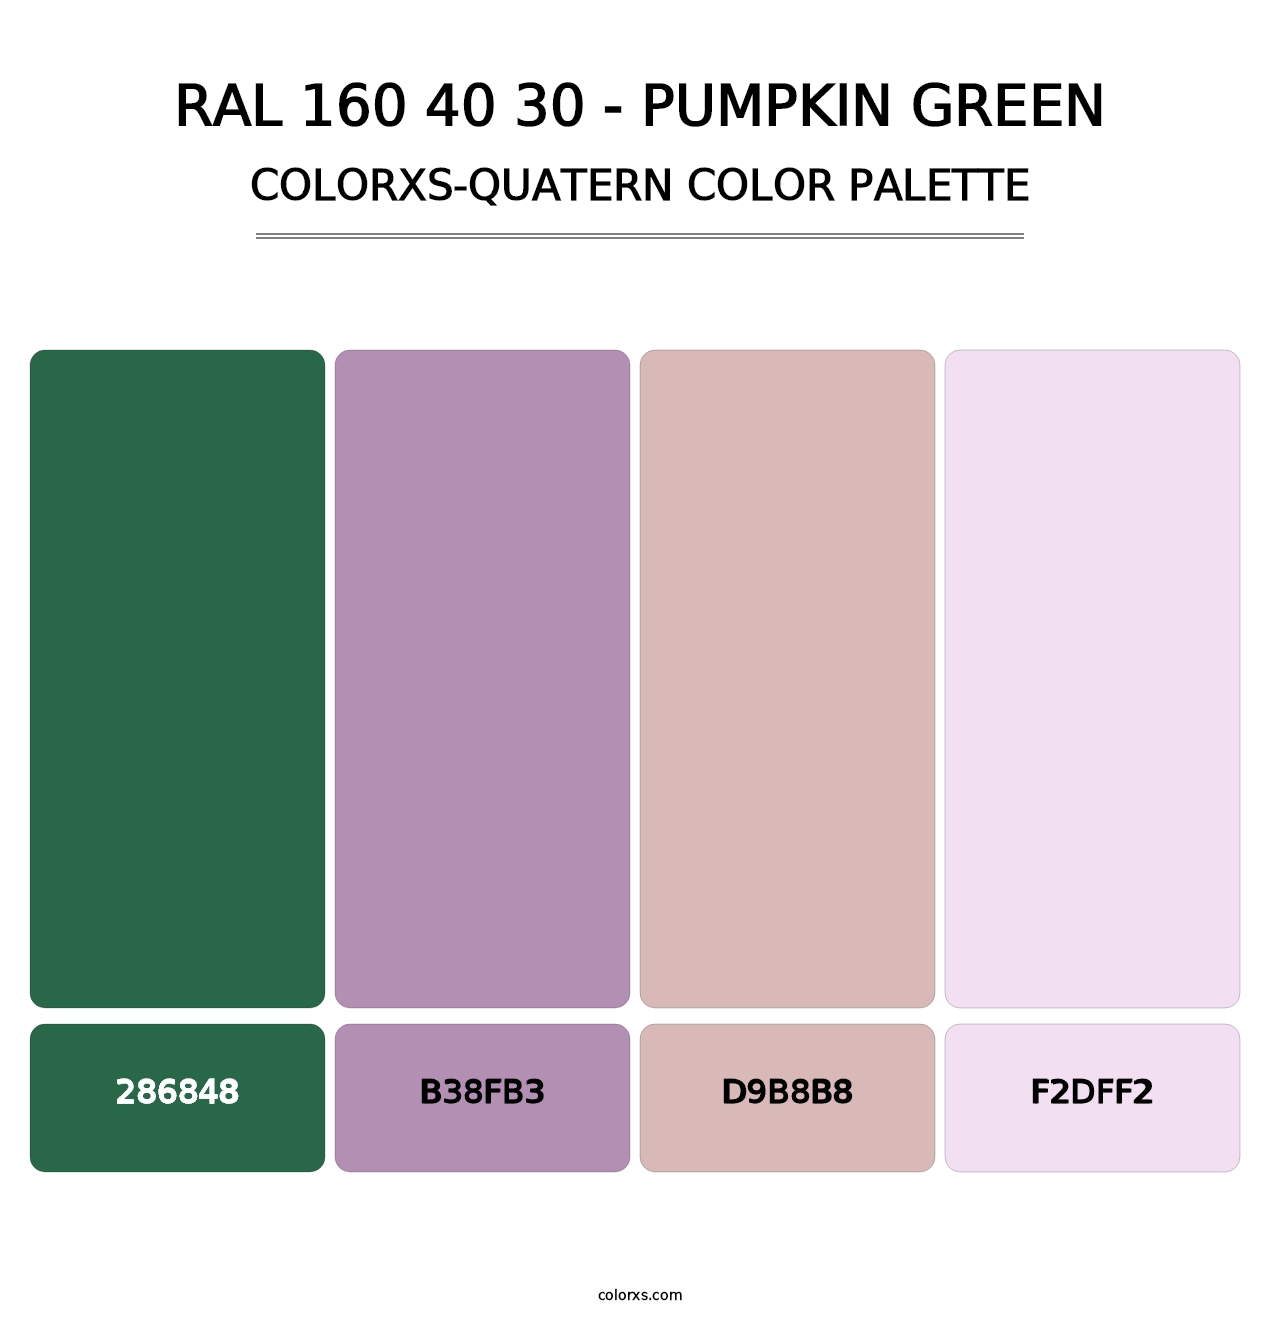 RAL 160 40 30 - Pumpkin Green - Colorxs Quatern Palette